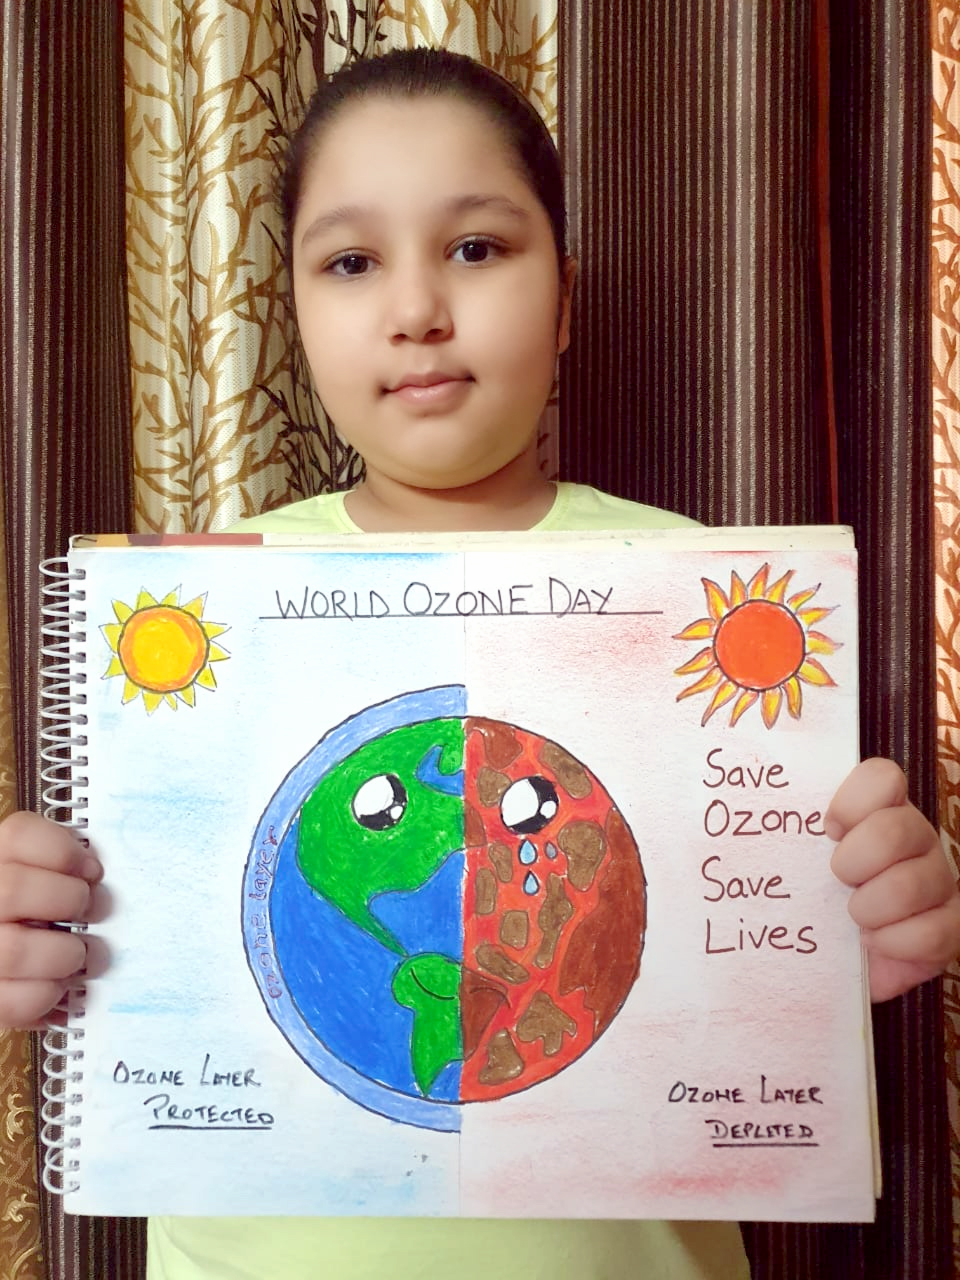 Presidium Pitampura, PRESIDIANS OBSERVE WORLD OZONE DAY WITH INFORMATIVE ACTIVITIES